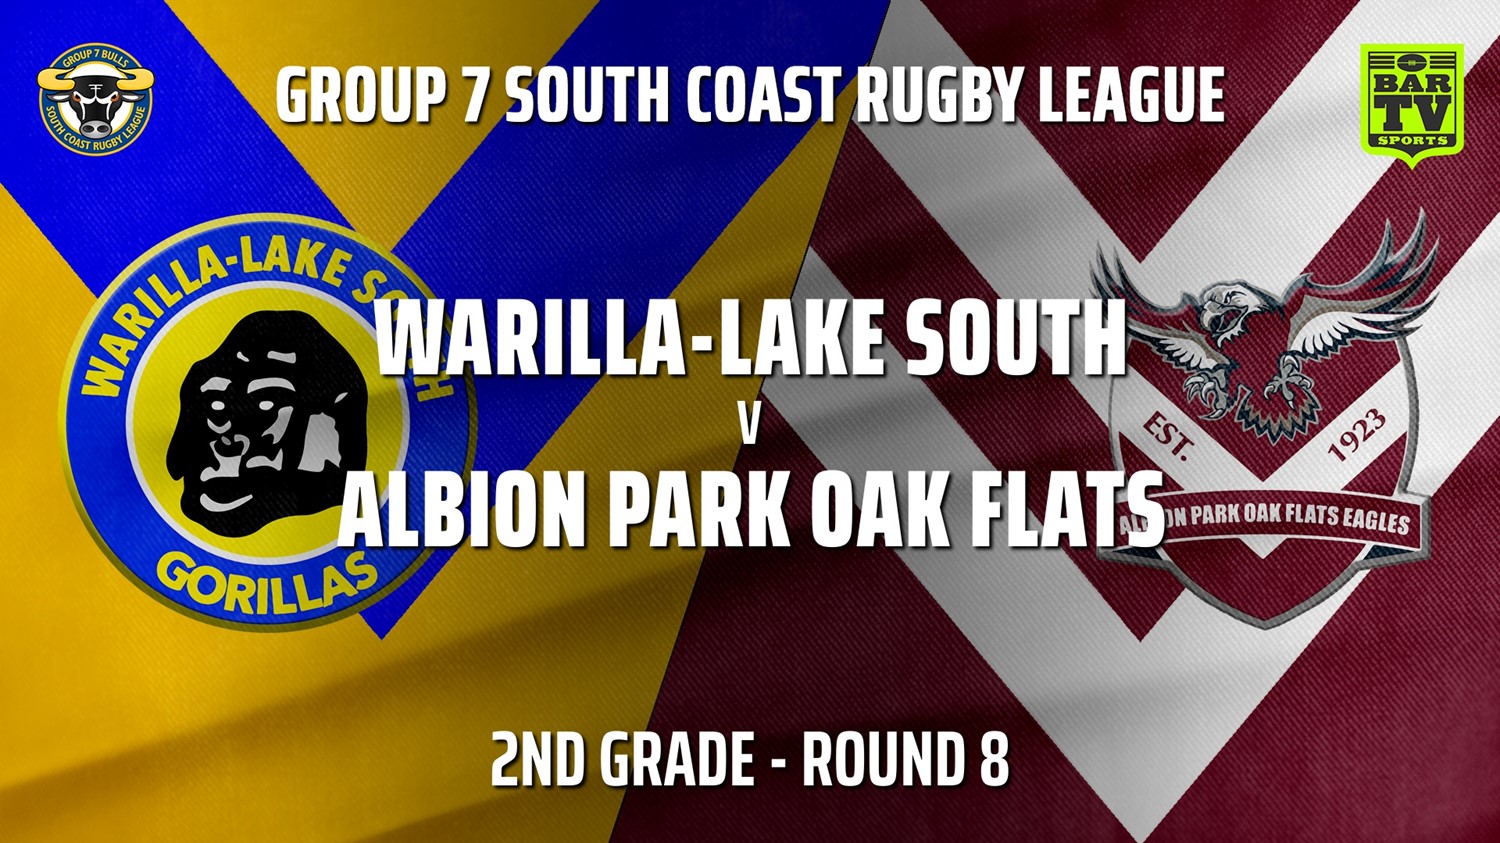 210606-Group 7 RL Round 8 - 2nd Grade - Warilla-Lake South v Albion Park Oak Flats Slate Image